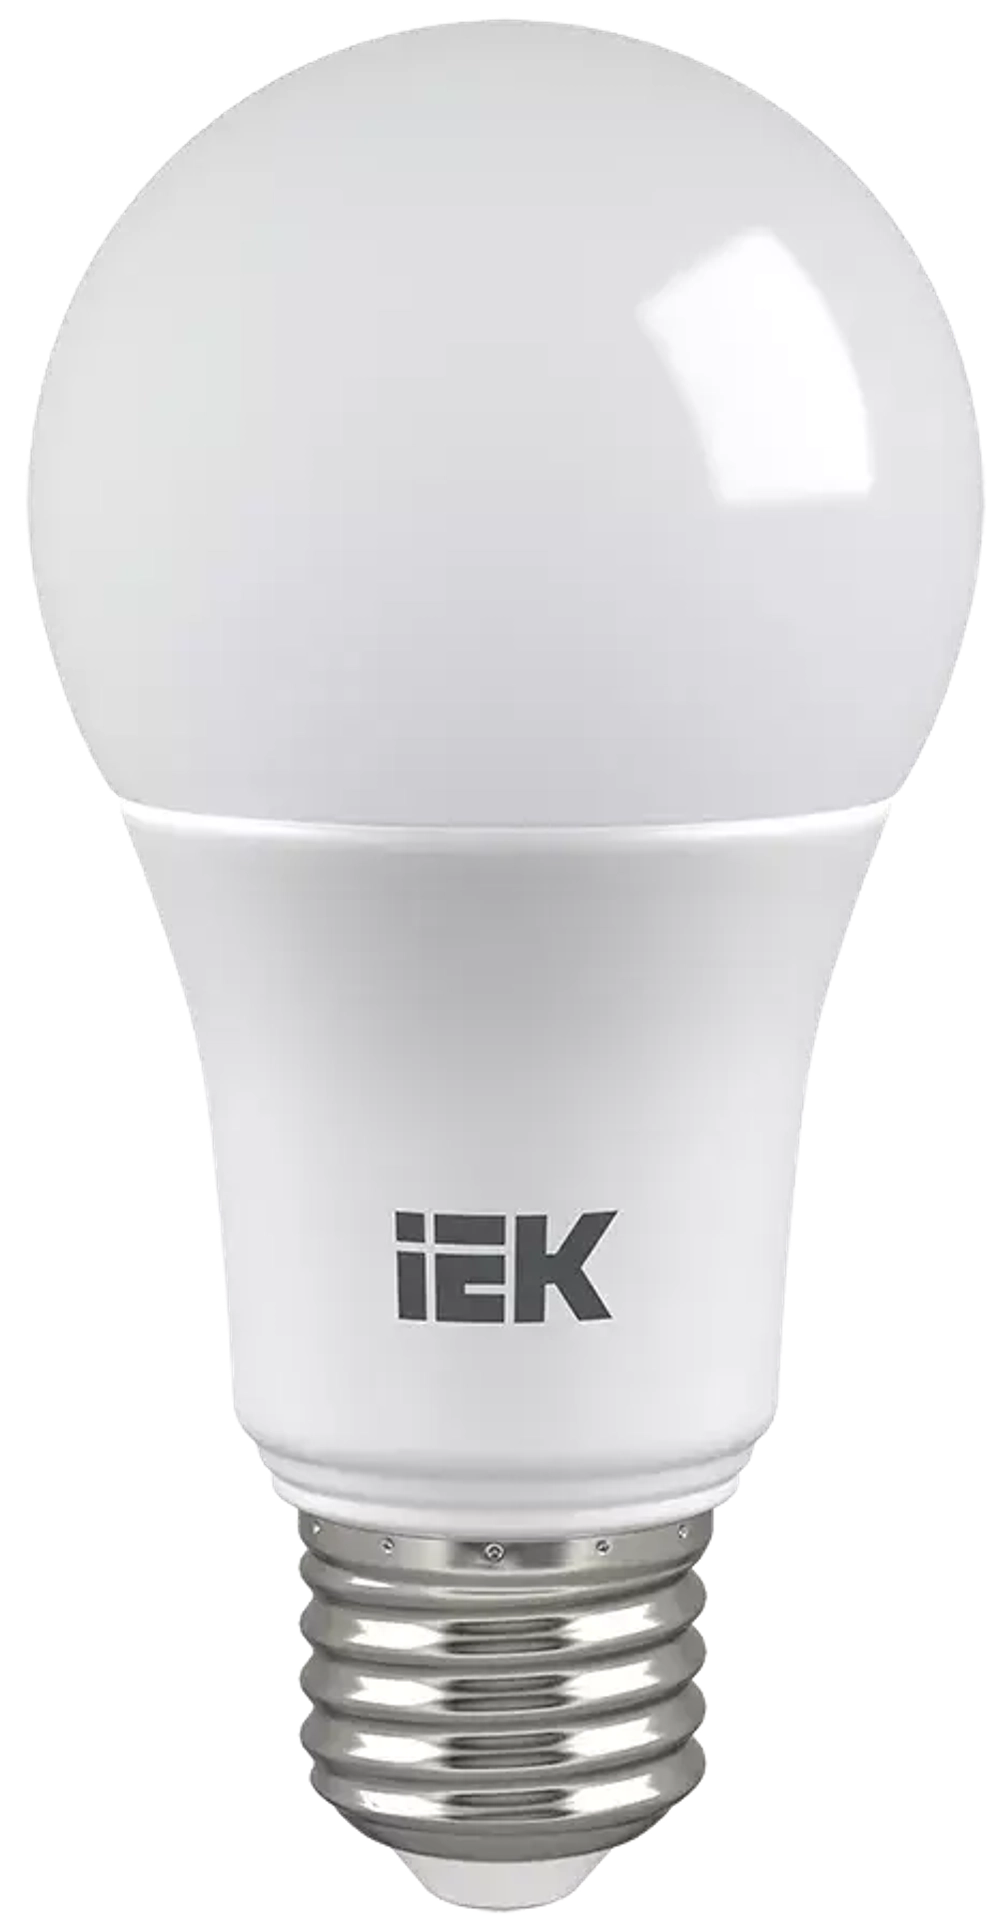 Лампа светодиодная ECO A80 шар 25Вт 230В 3000К Е27 IEK LLE-A80-25-230-30-E27